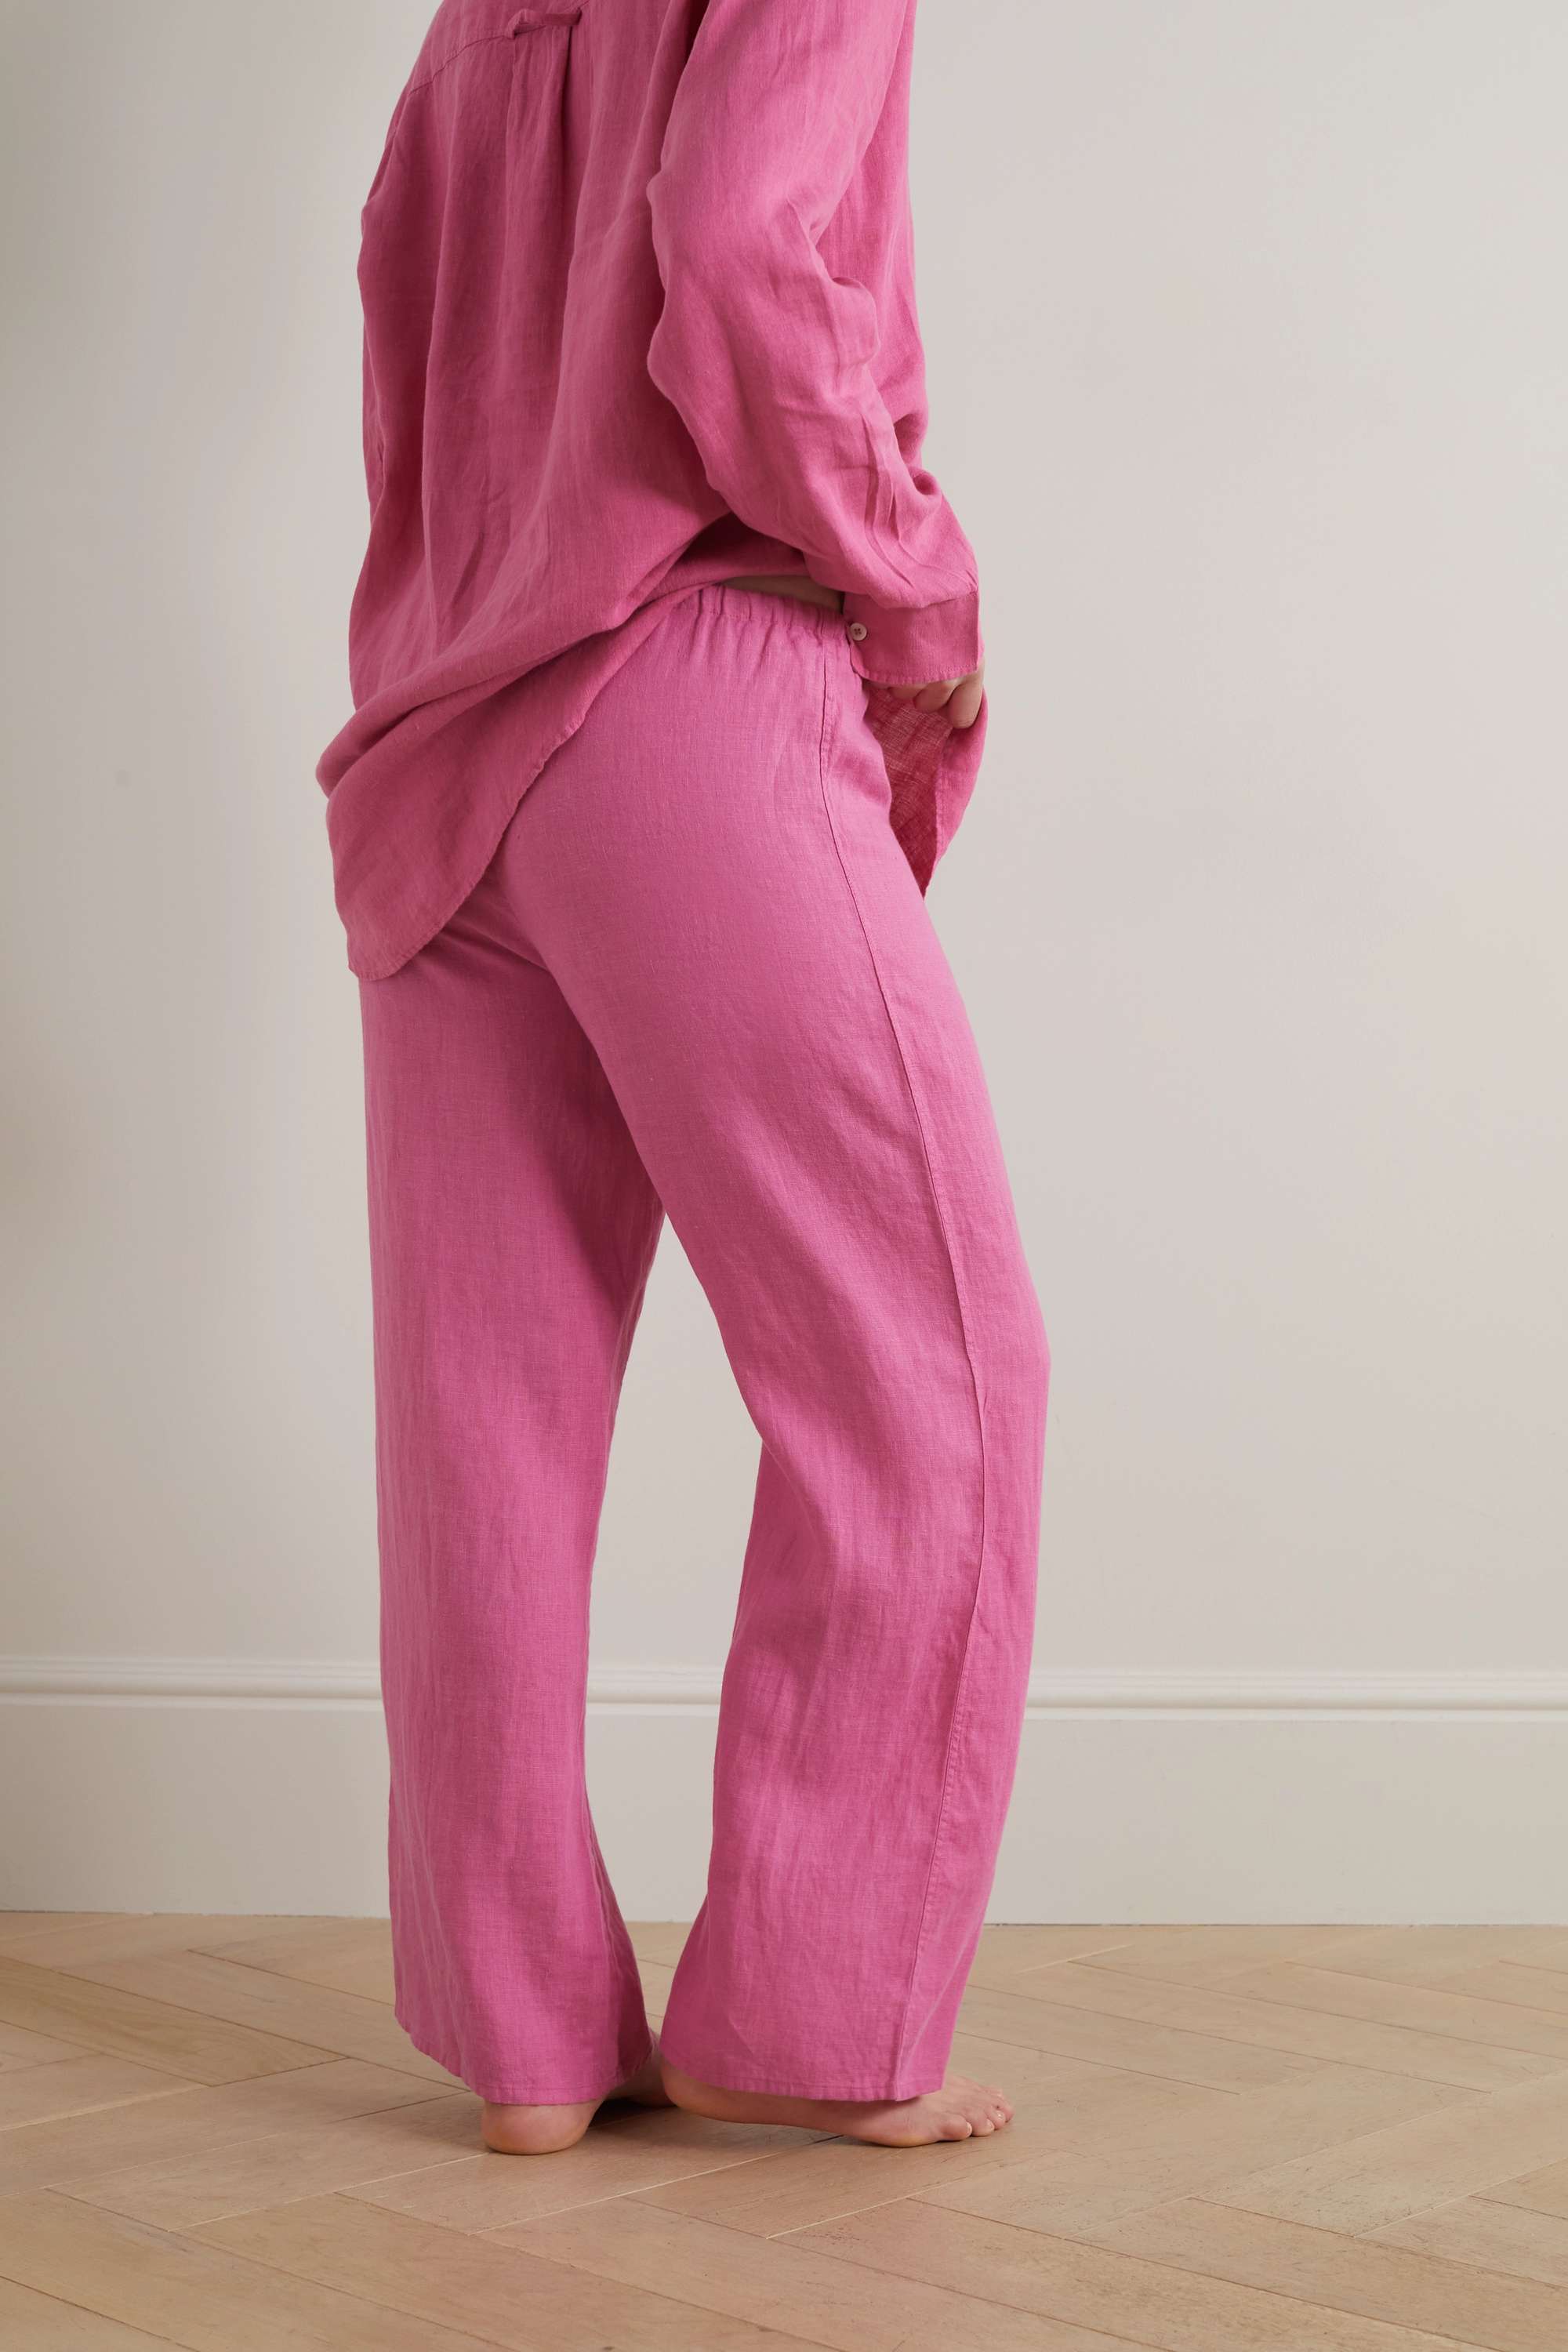 DESMOND & DEMPSEY + льняные брюки NET SUSTAIN, розовый